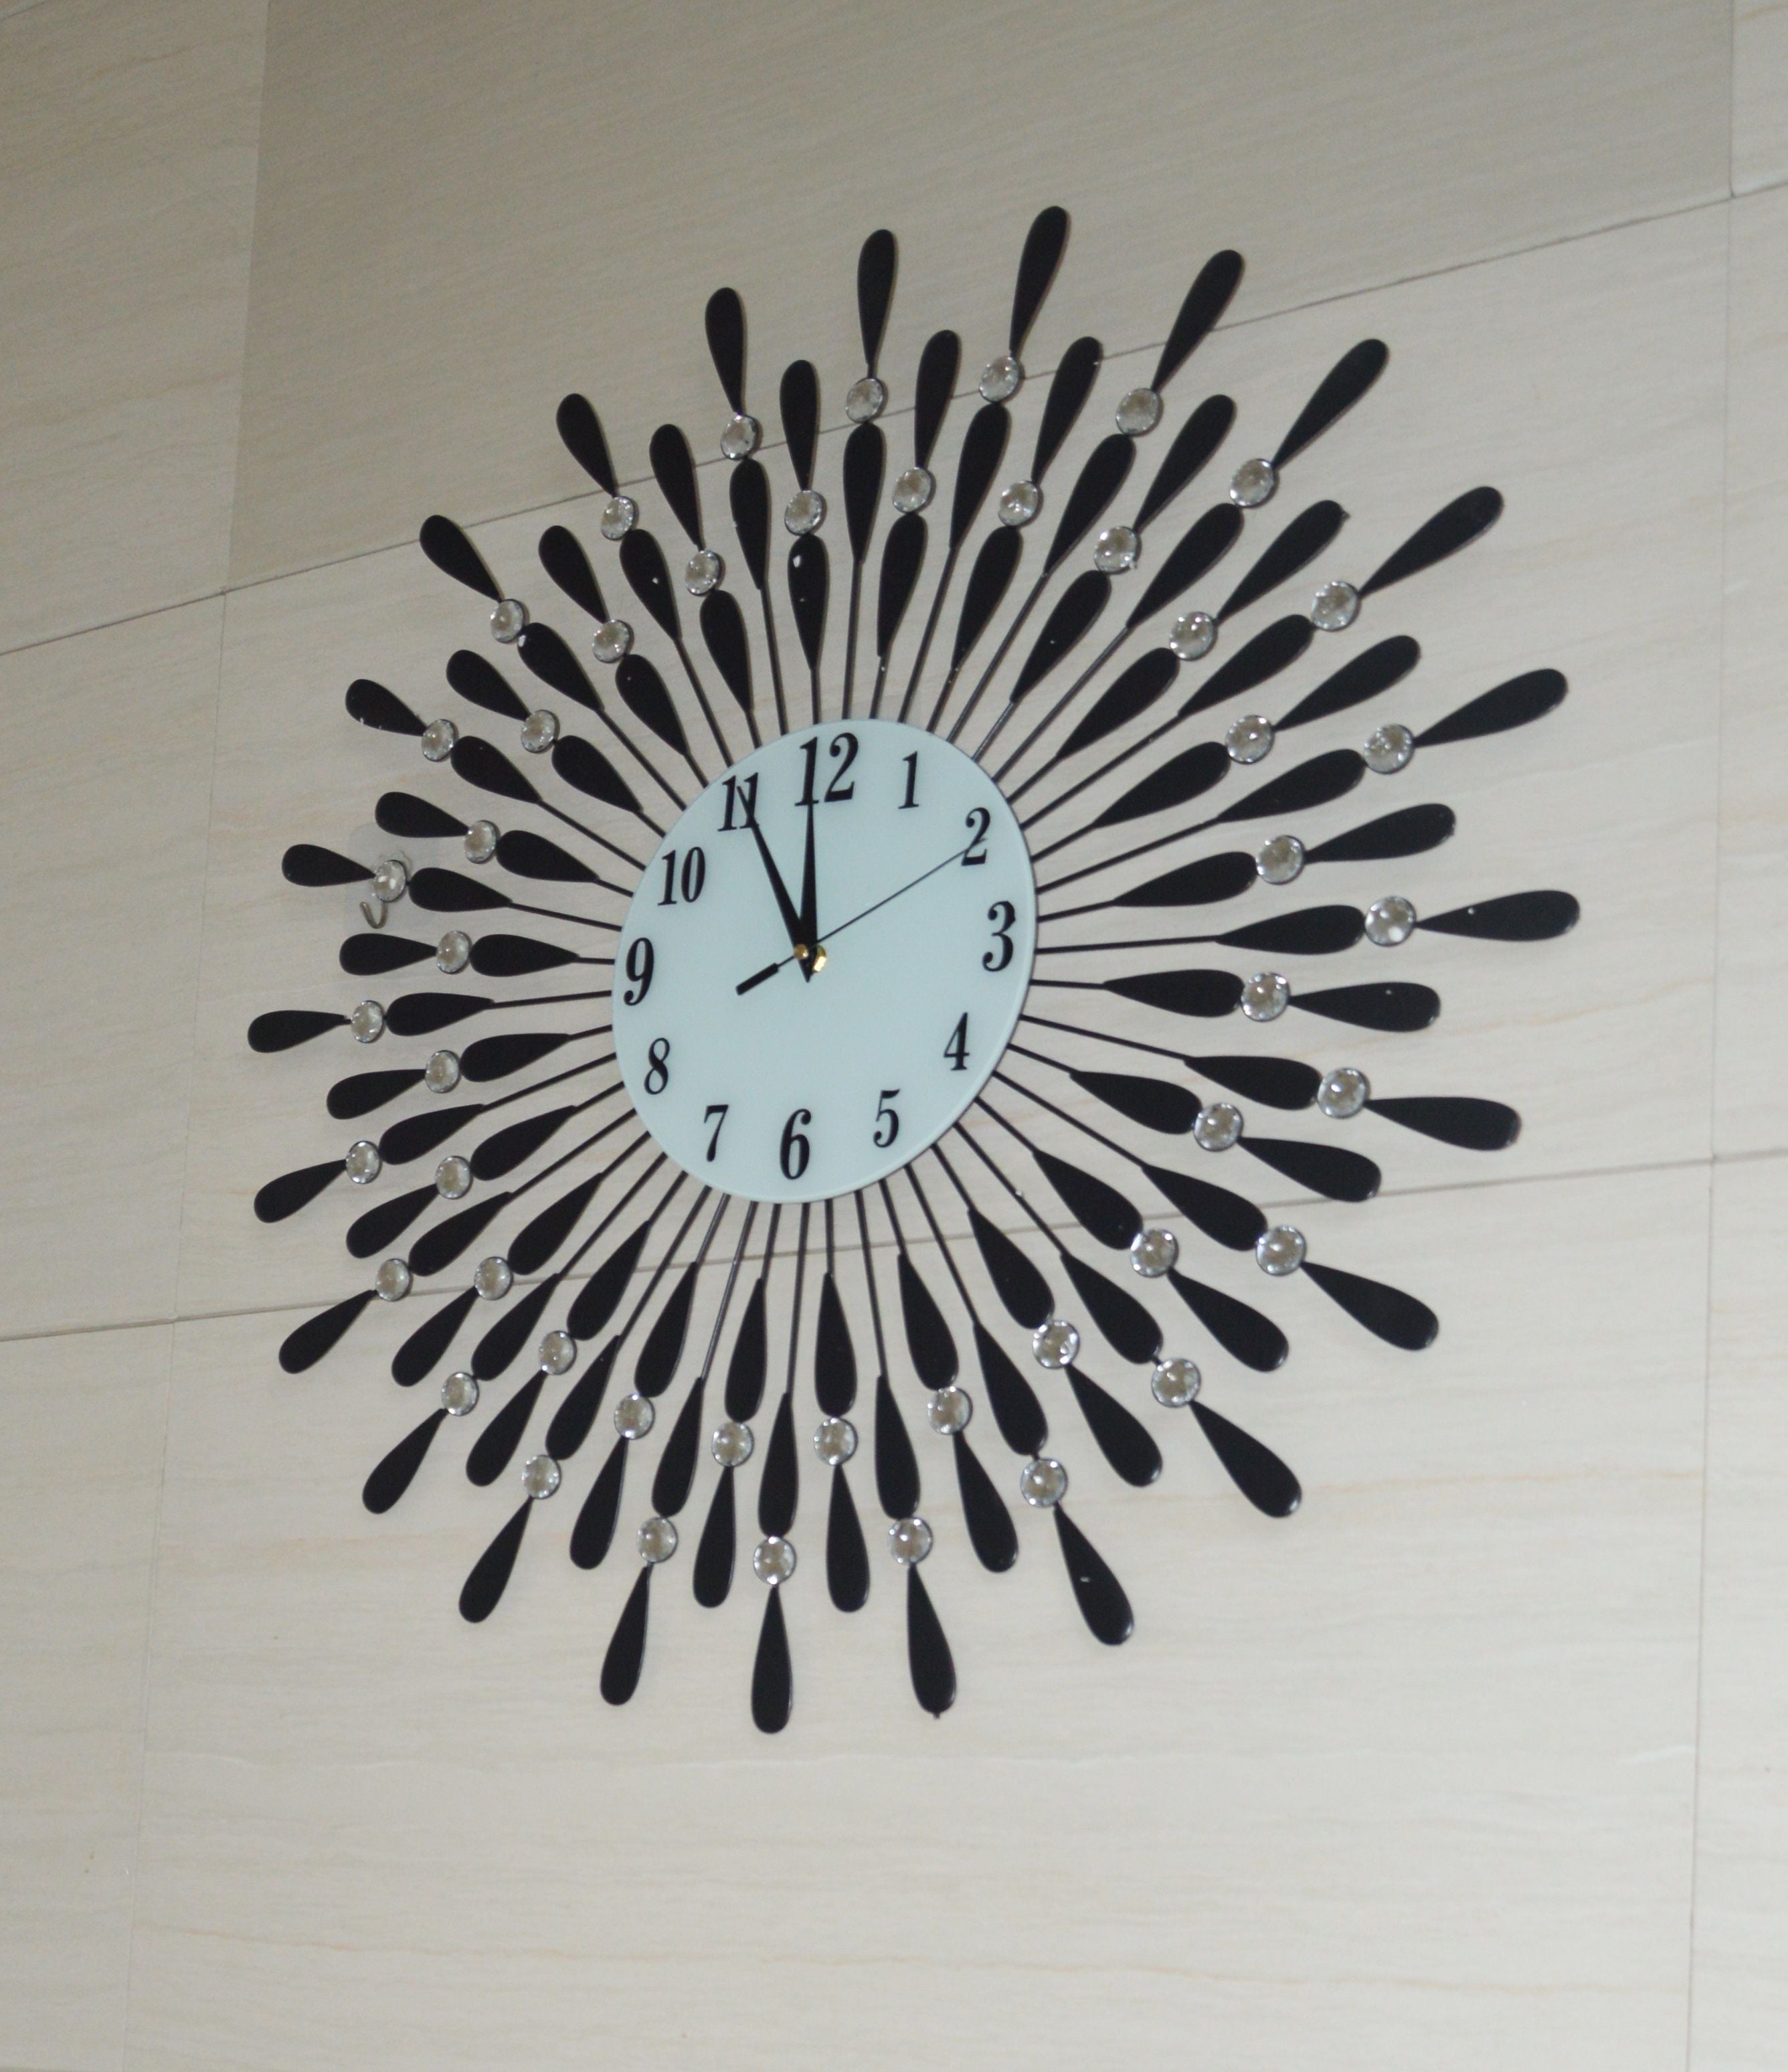 3D Large Metal Sunburst Wall Clock Luxury Wall Clock Battery Operated Art  Decor